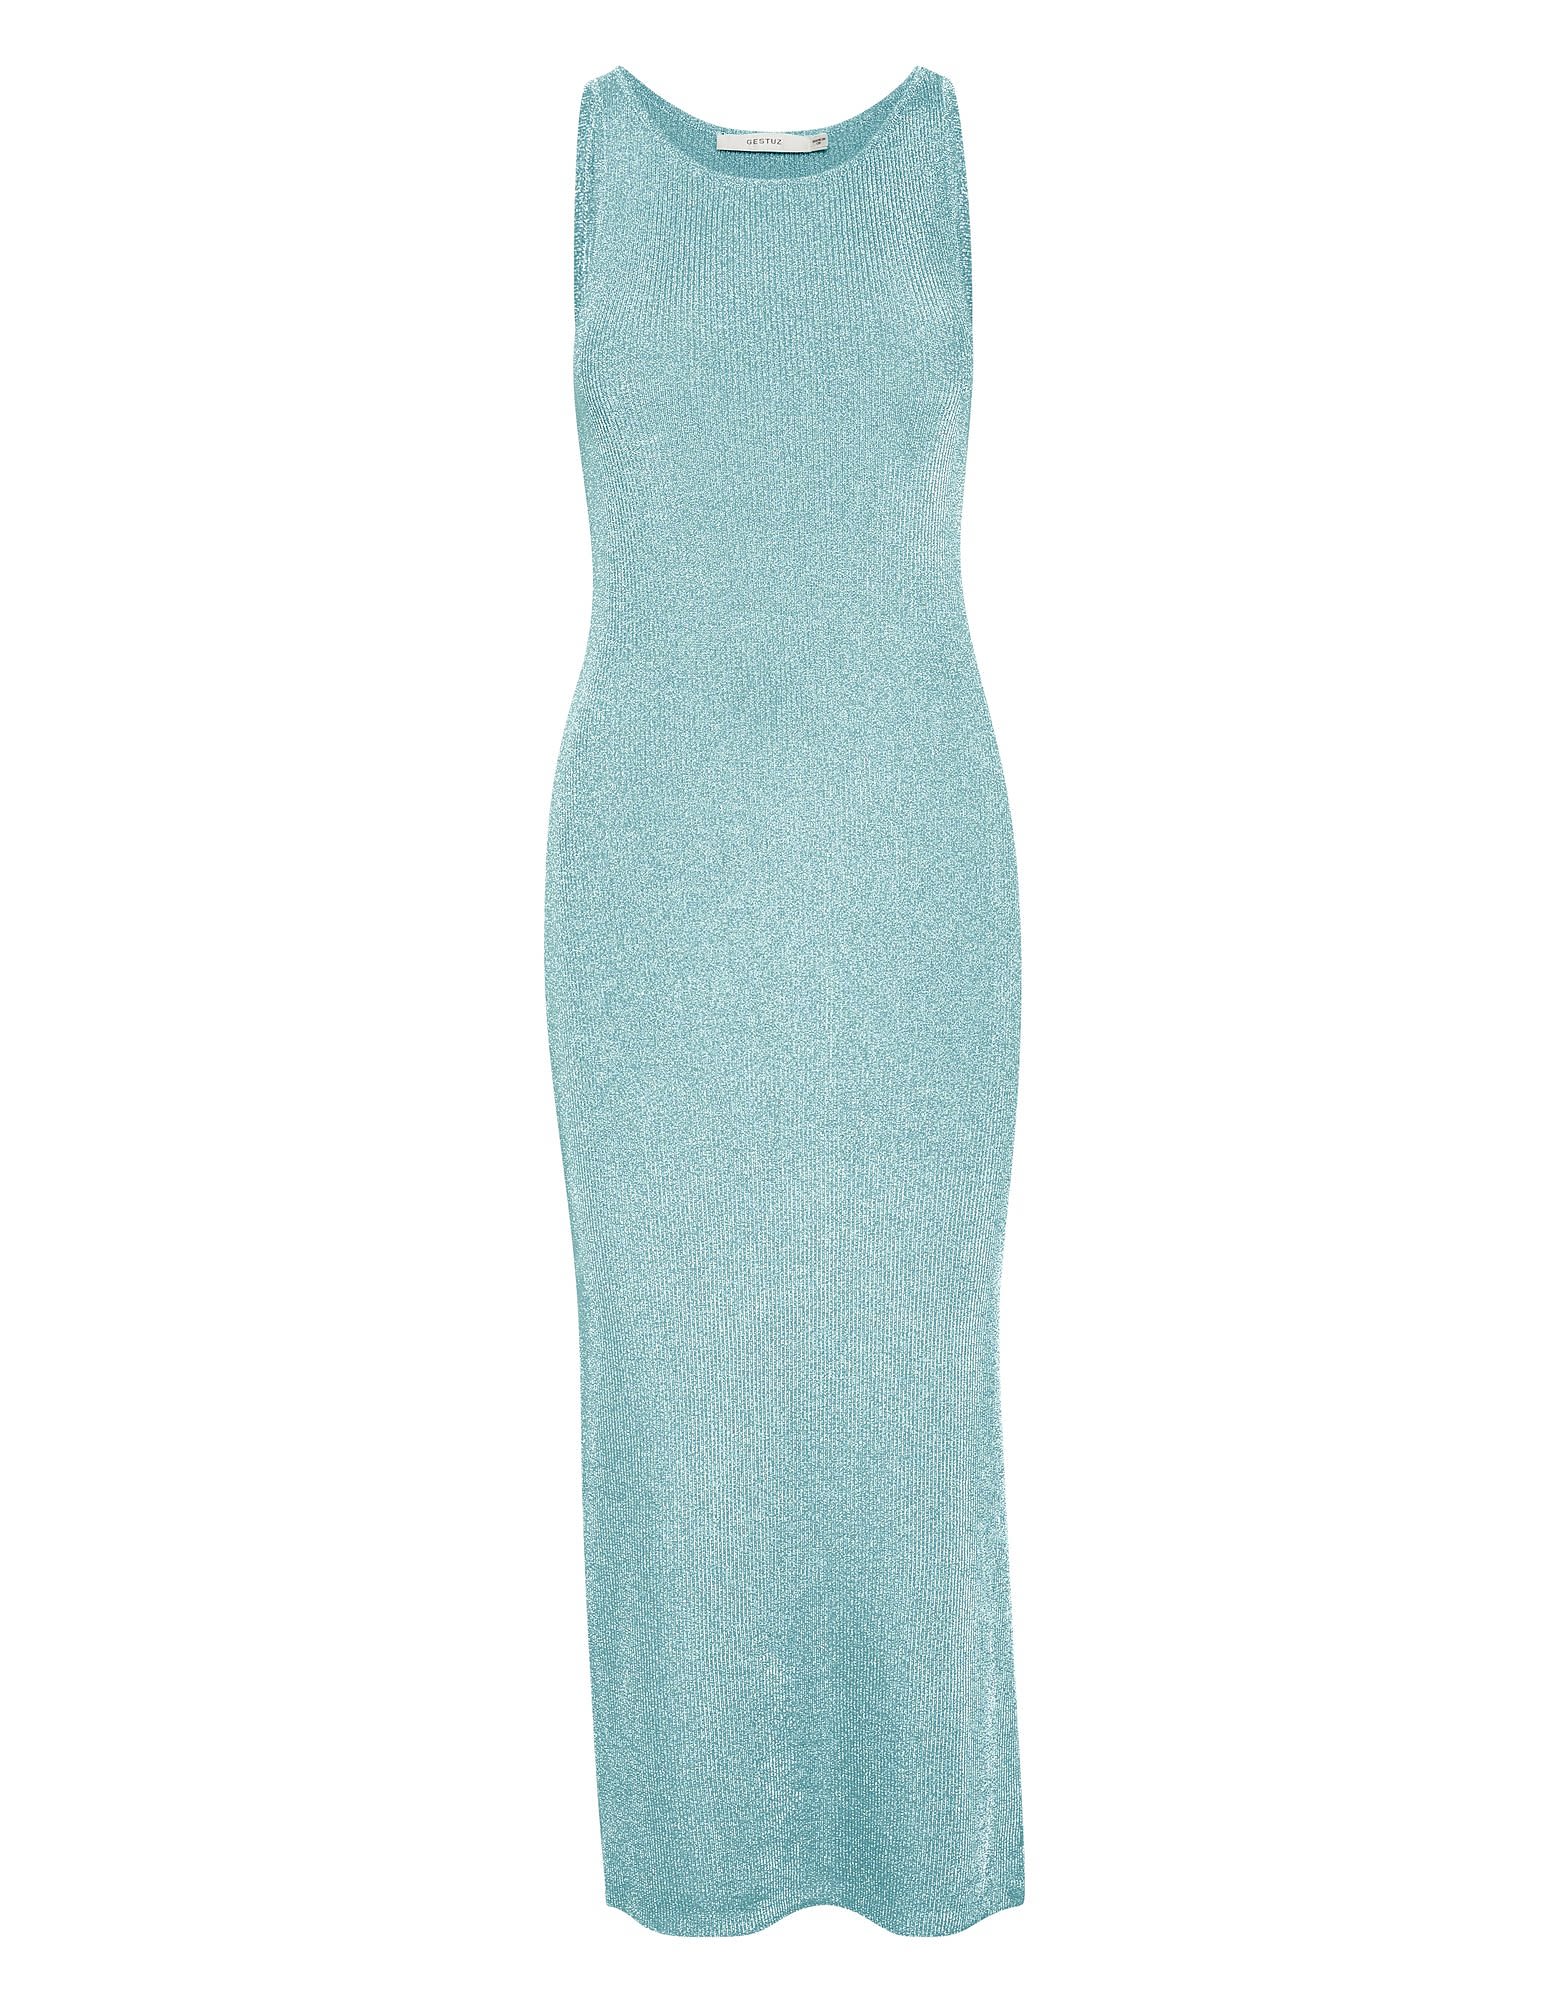 Silvigz Clear Blue Sleeveless Dress